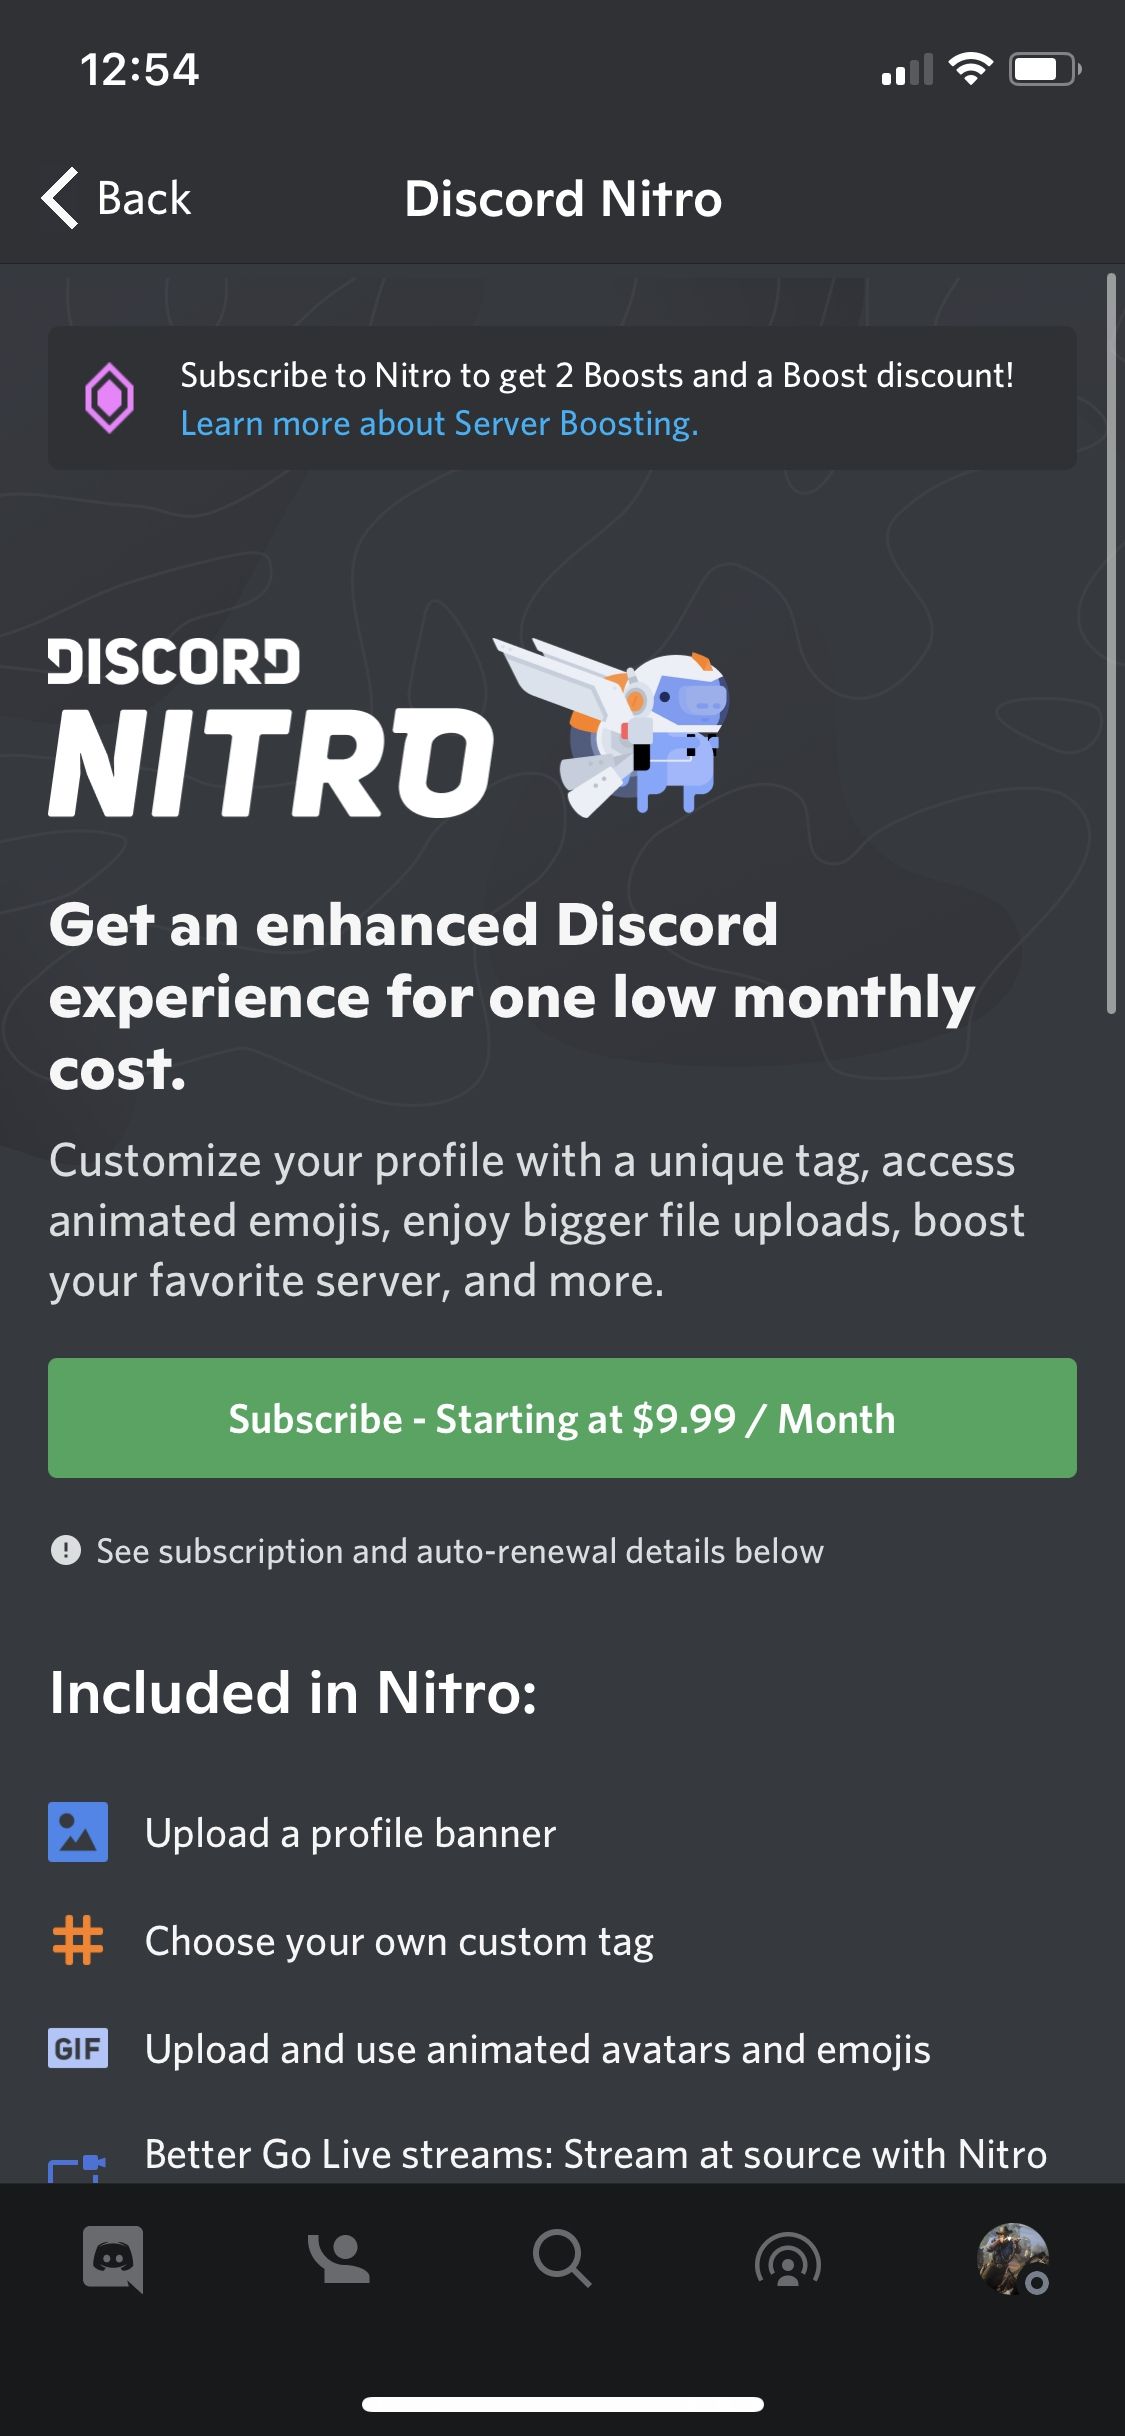 Subscribing to Discord Nitro on mobile